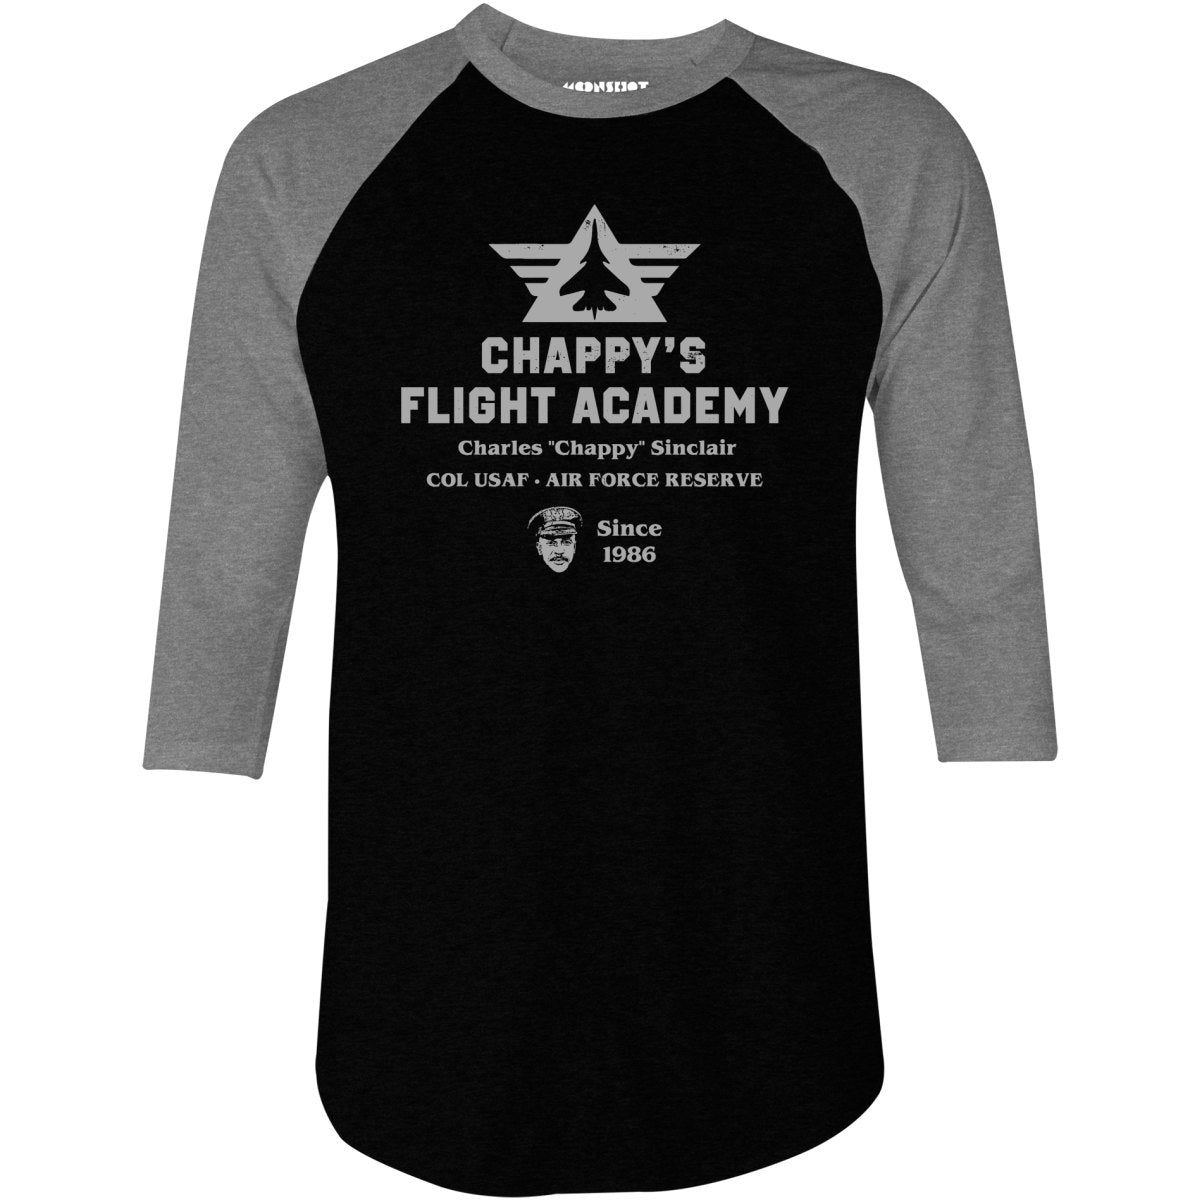 Chappy's Flight Academy - Iron Eagle - 3/4 Sleeve Raglan T-Shirt